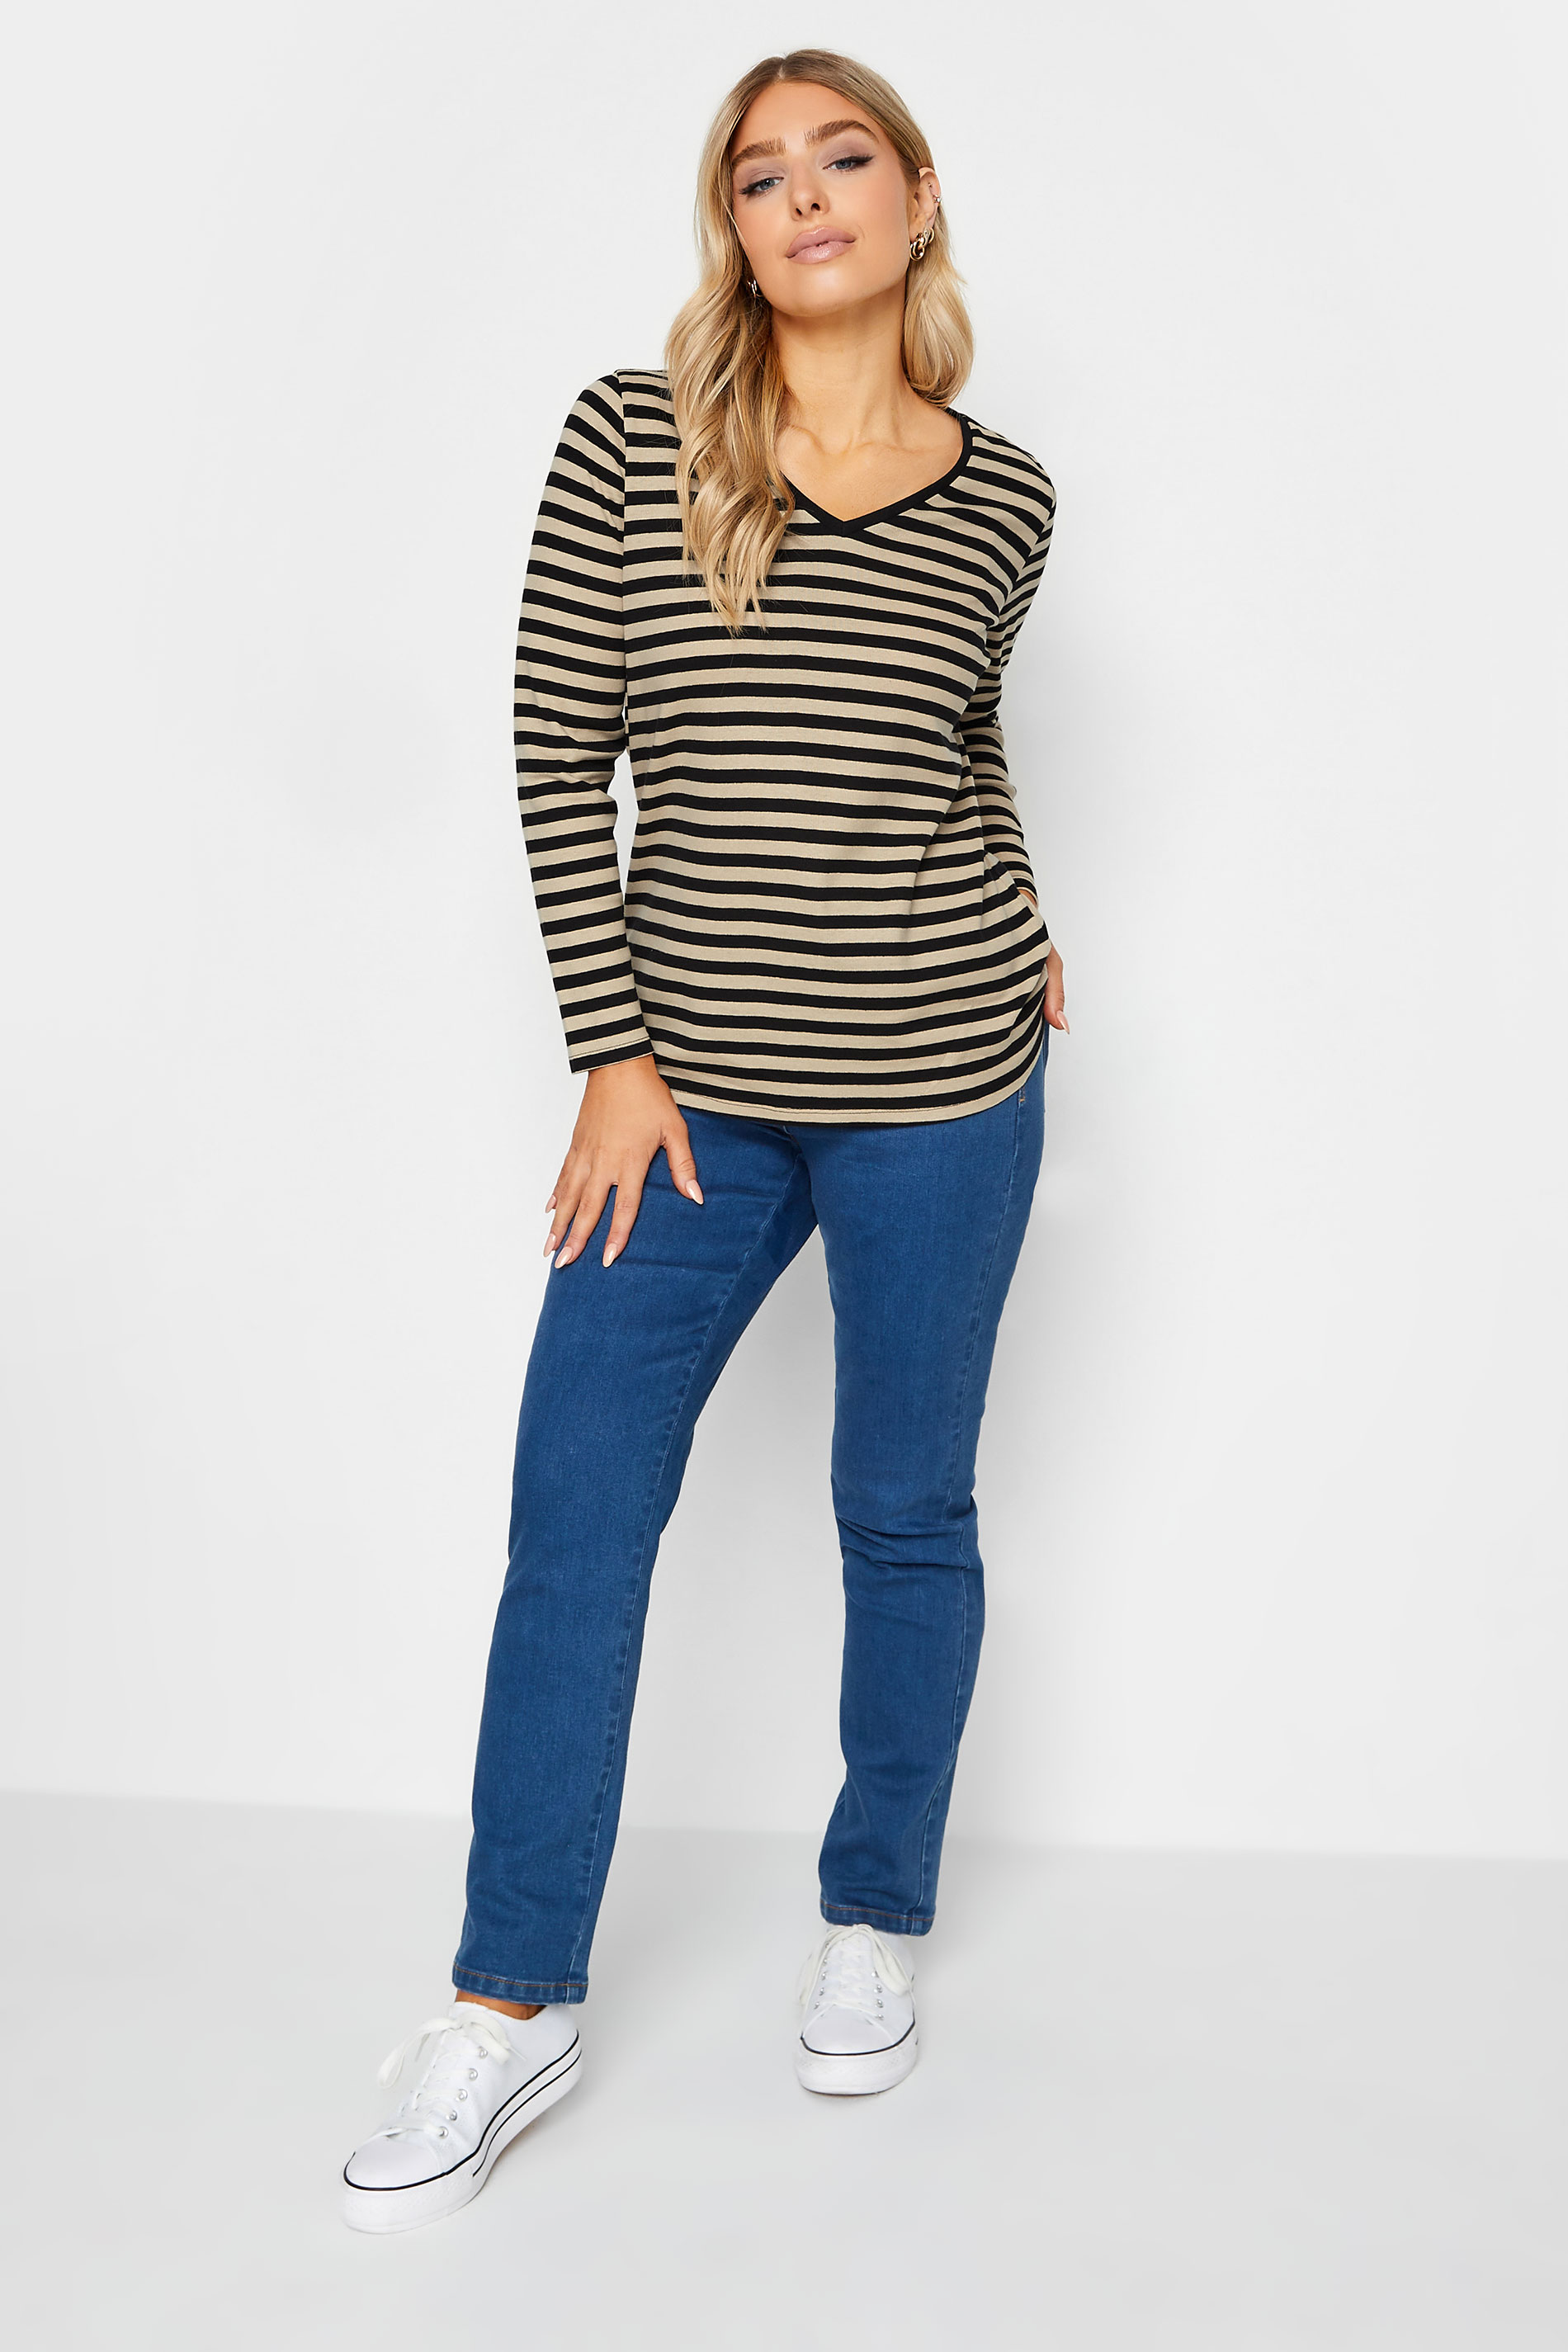 M&Co Beige Brown Stripe V-Neck Cotton Long Sleeve T-Shirt | M&Co 3